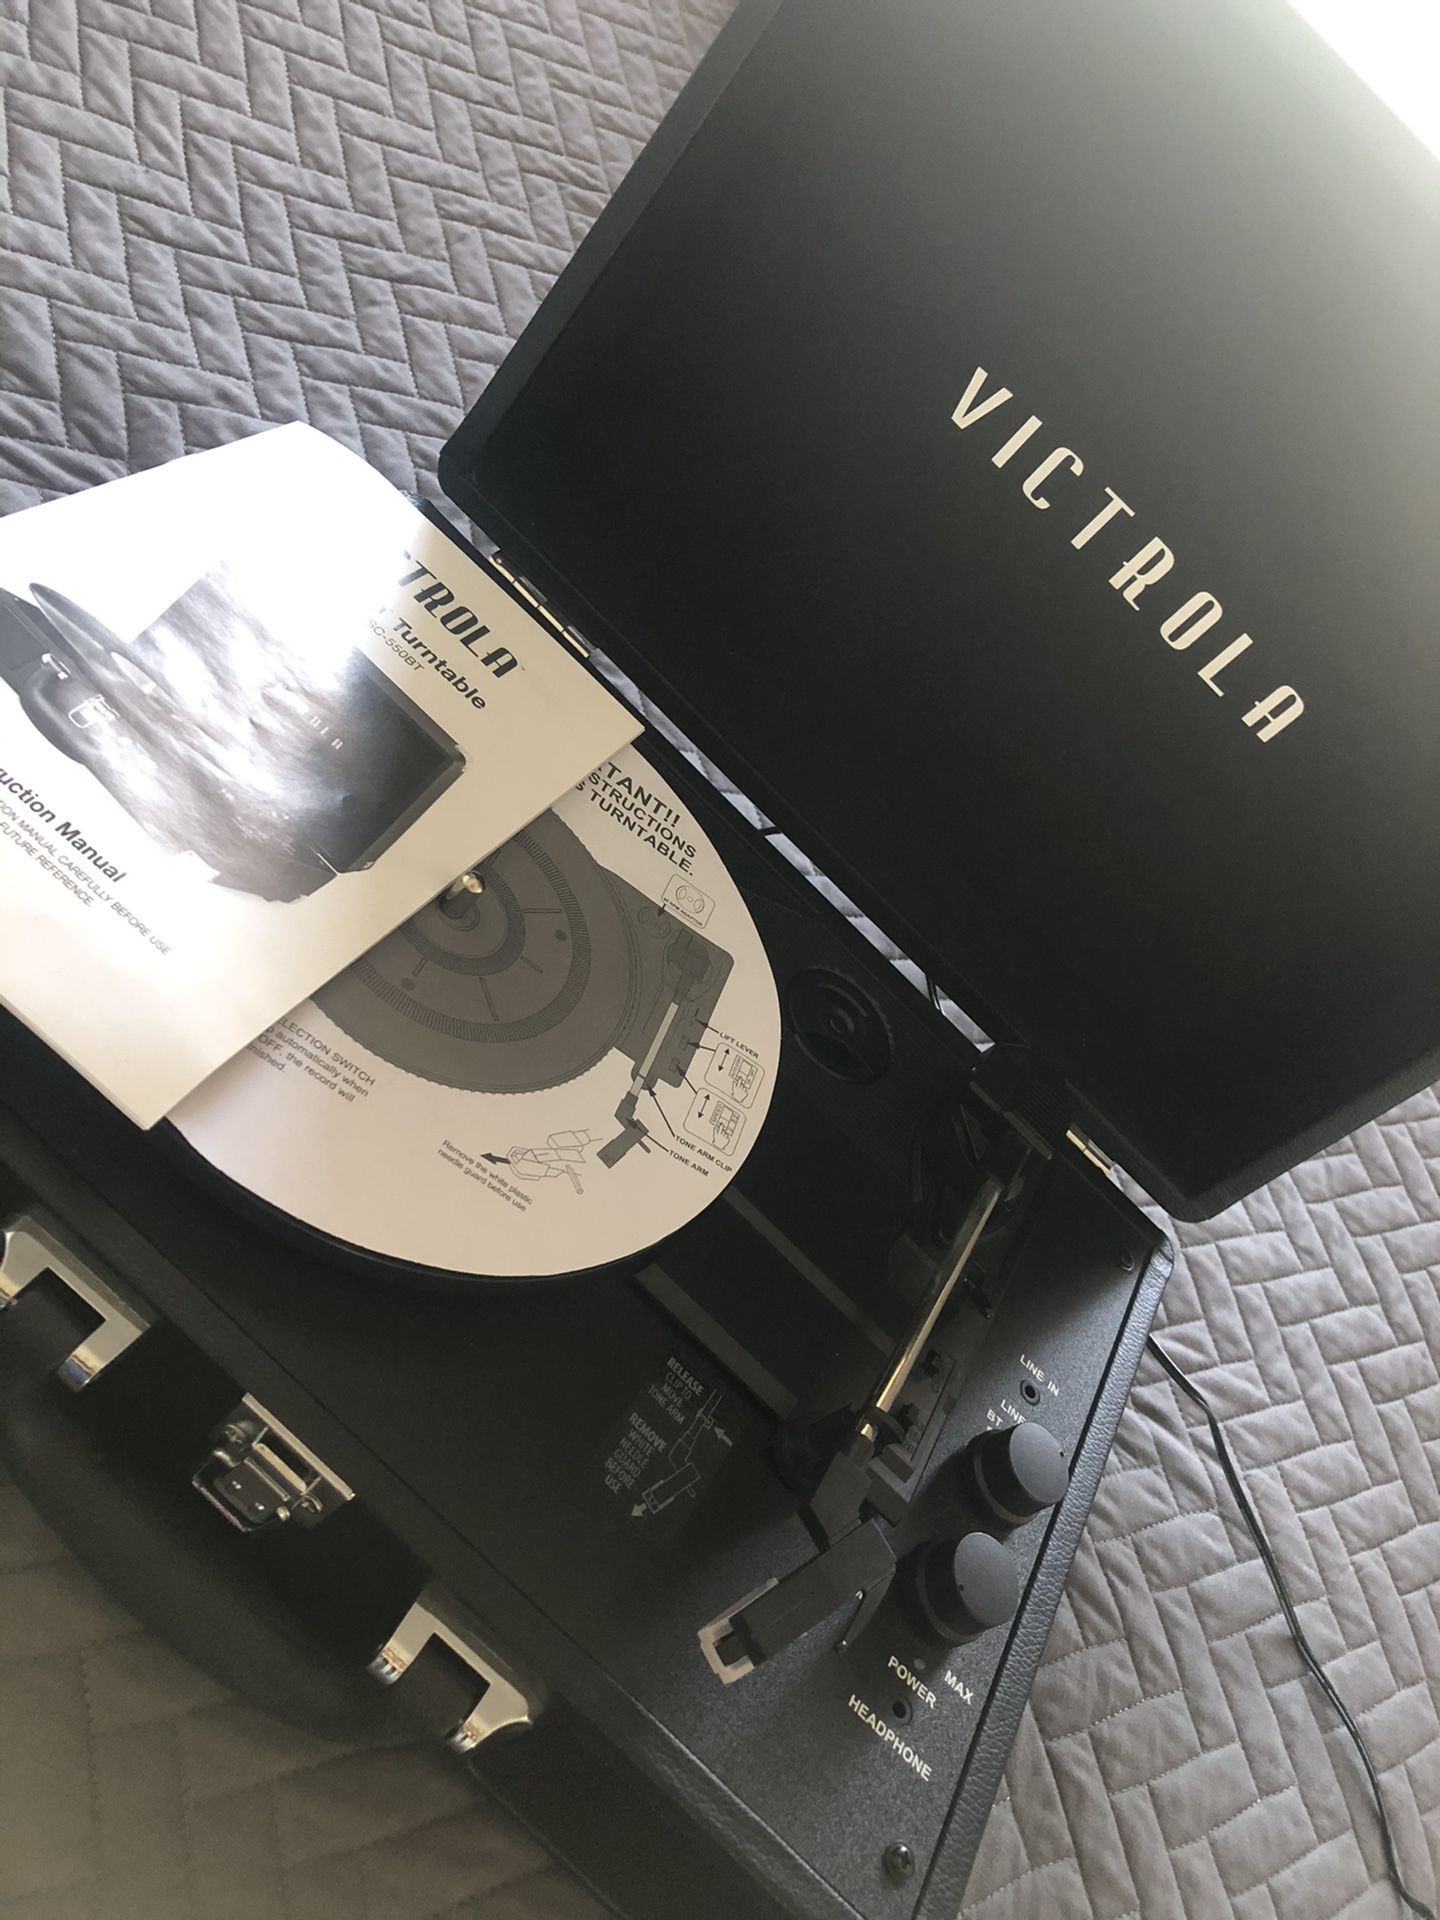 Victrola record player